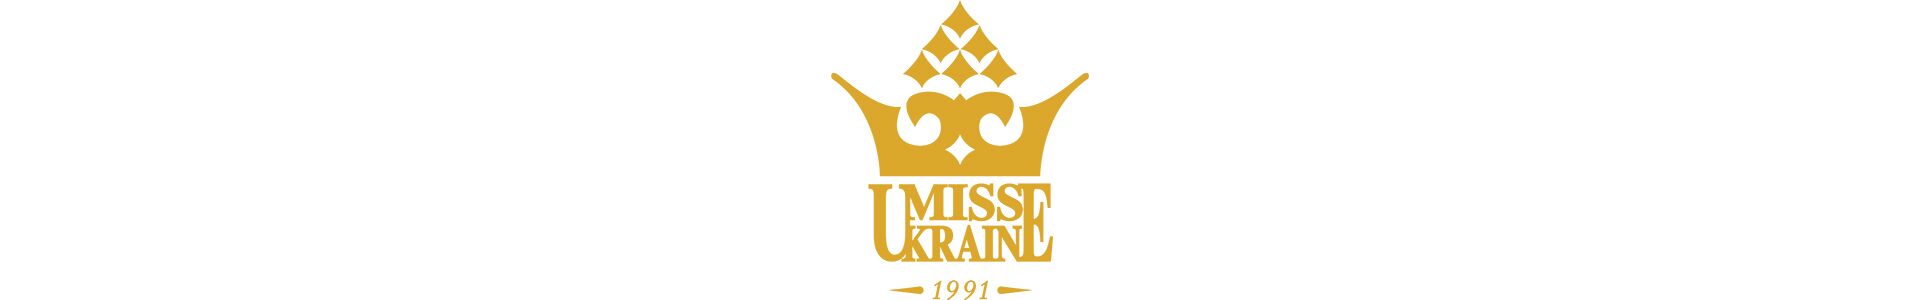 Final show of Miss Ukraine 2016